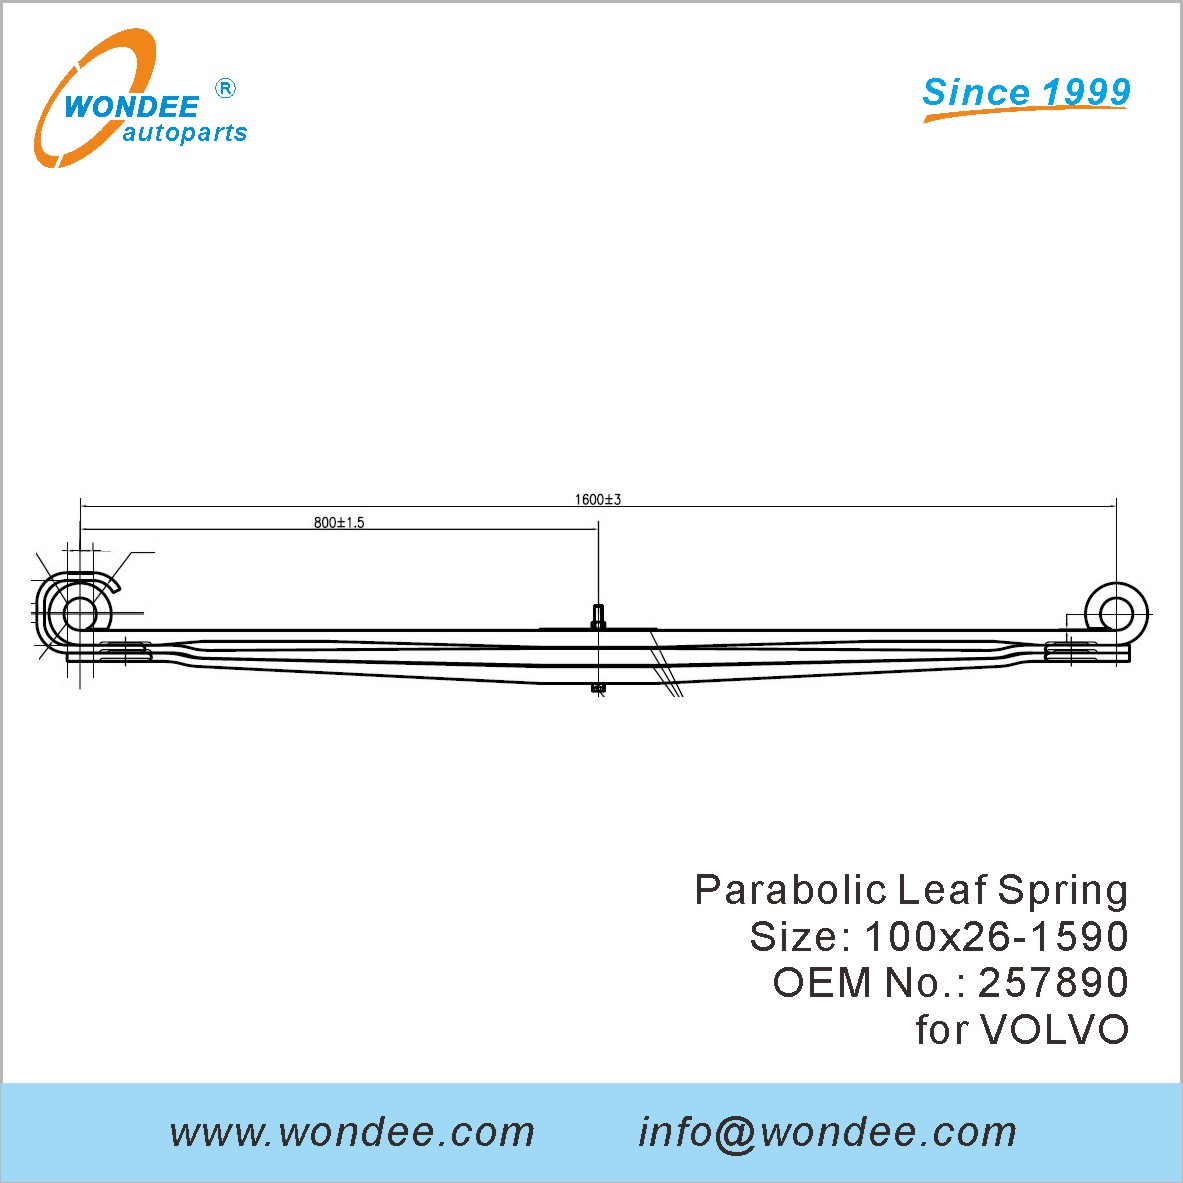 WONDEE heavy duty parabolic Leaf Spring OEM 257890 for VOLVO